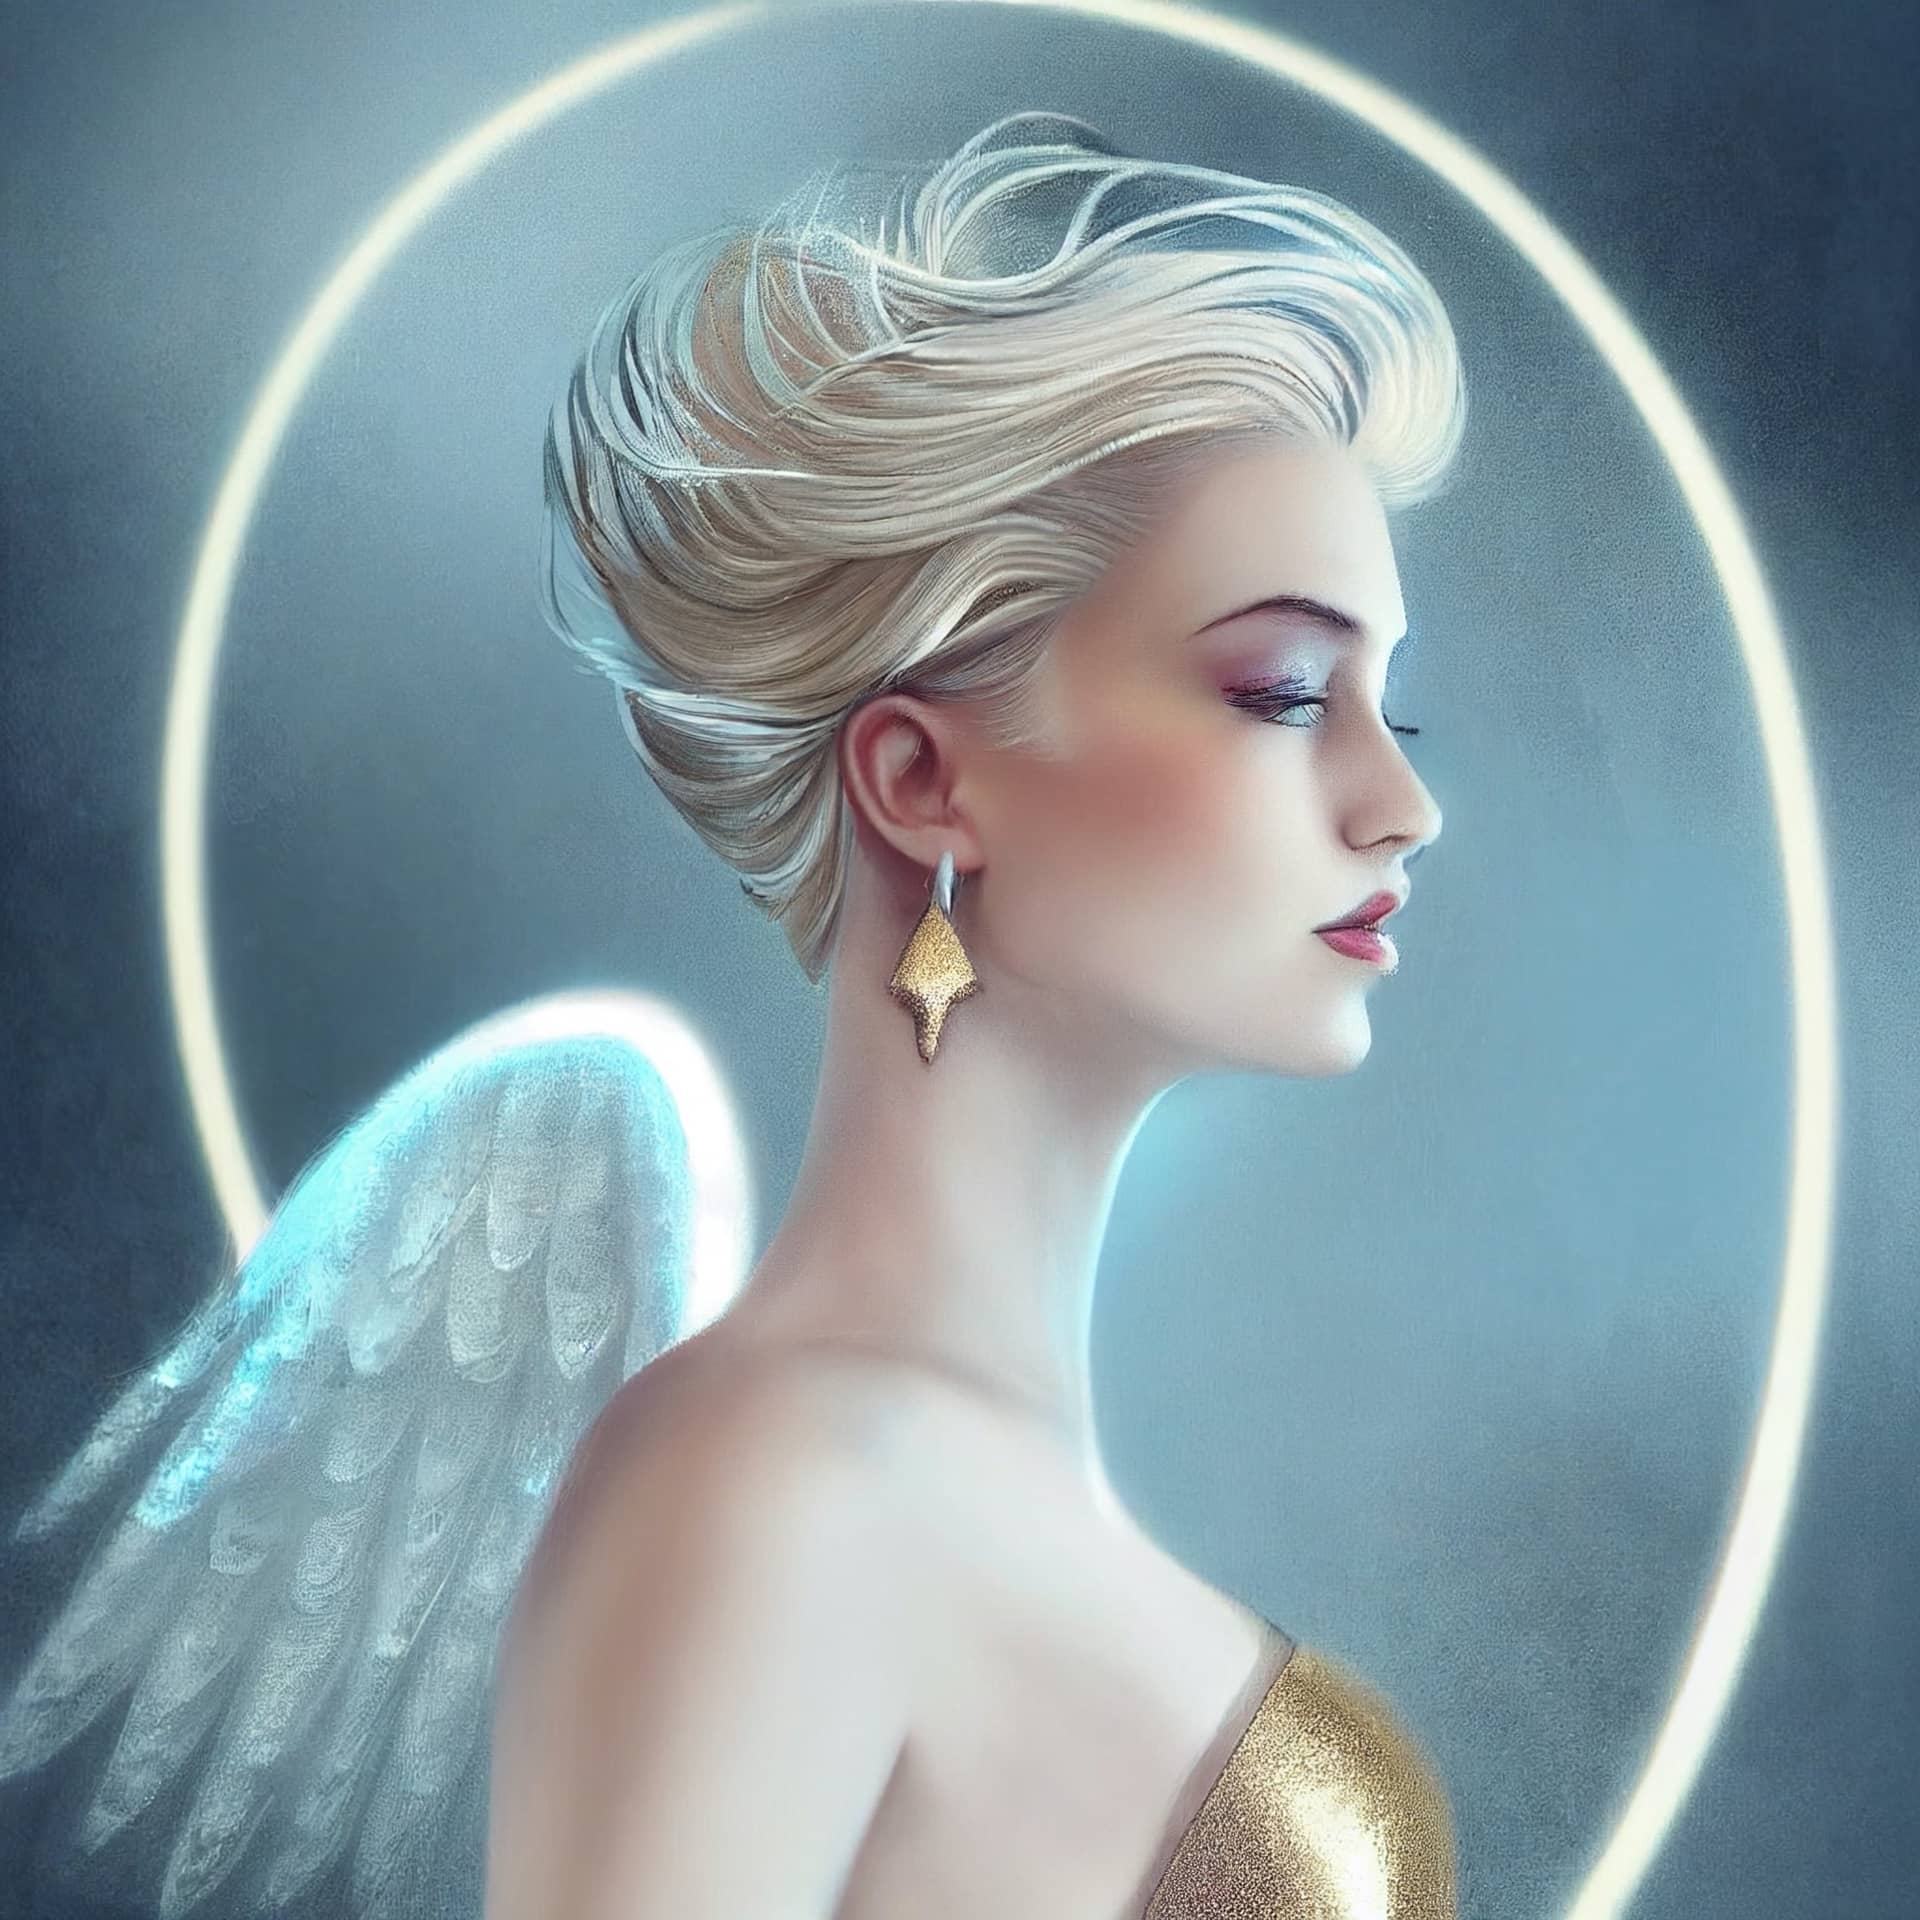 Angel portrait fantasy woman with wings 3d rendering